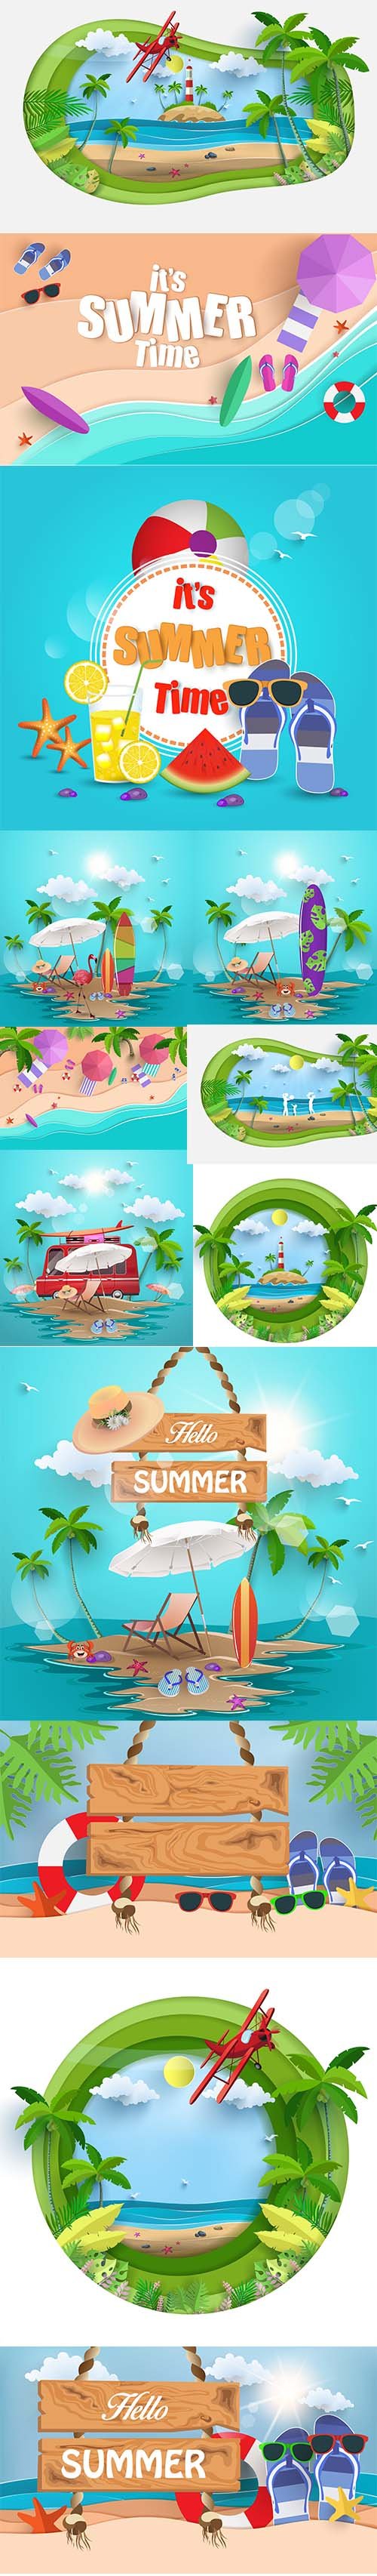 Island Beach with Summer Scene Illustrations